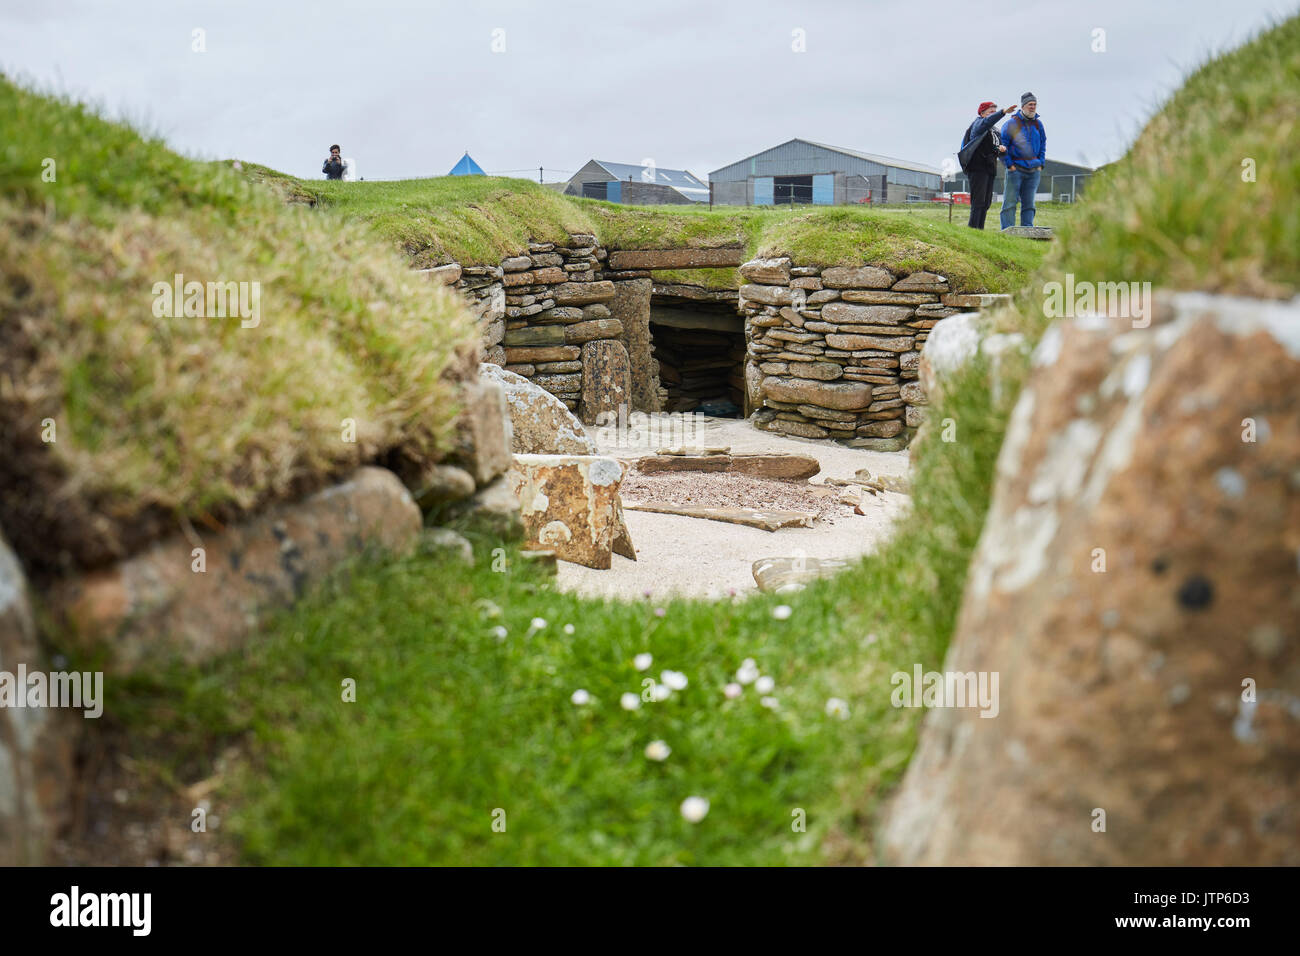 Scottish sito preistorico nelle Orkney. Skara Brae. Scozia Foto Stock